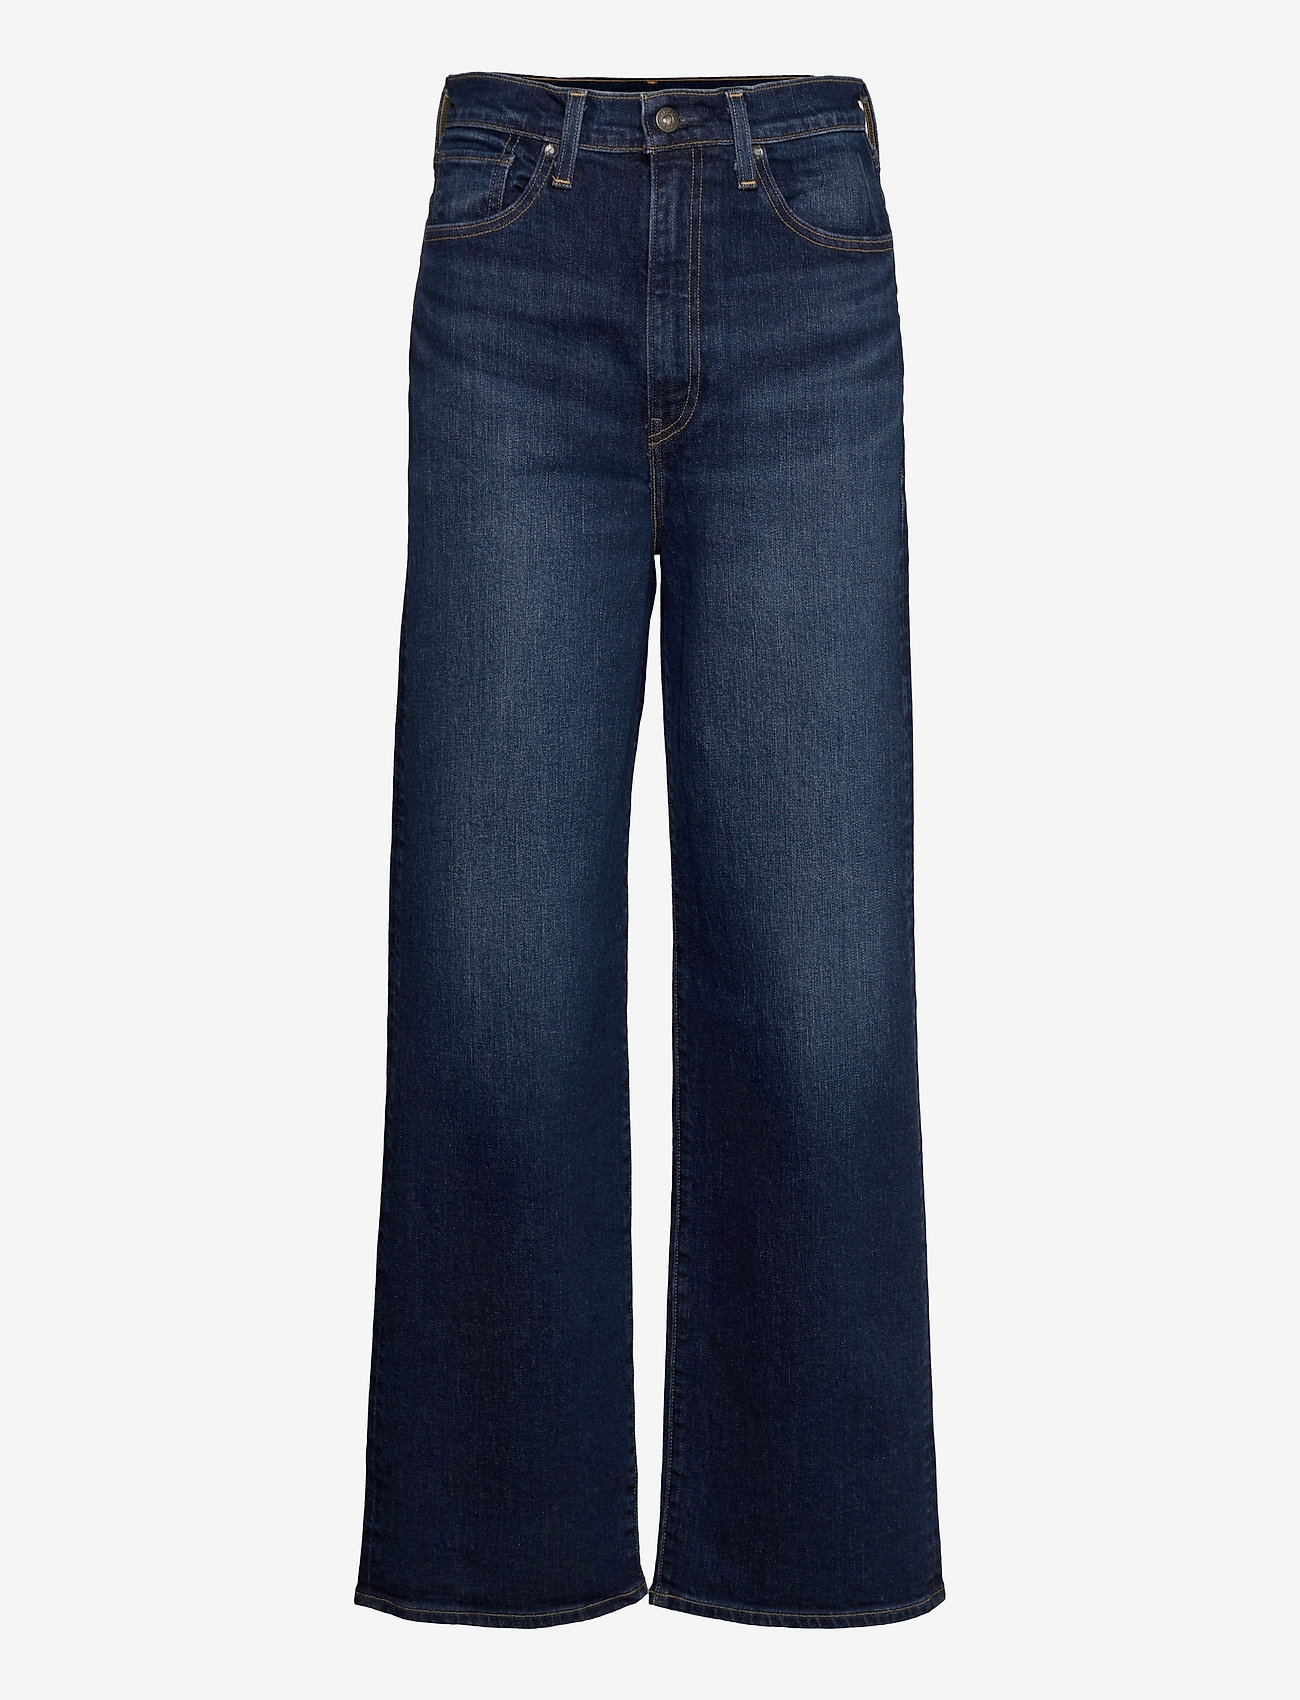 Levi's Made & Crafted - LMC HIGH LOOSE LMC NAMI - wide leg jeans - dark indigo - worn in - 0